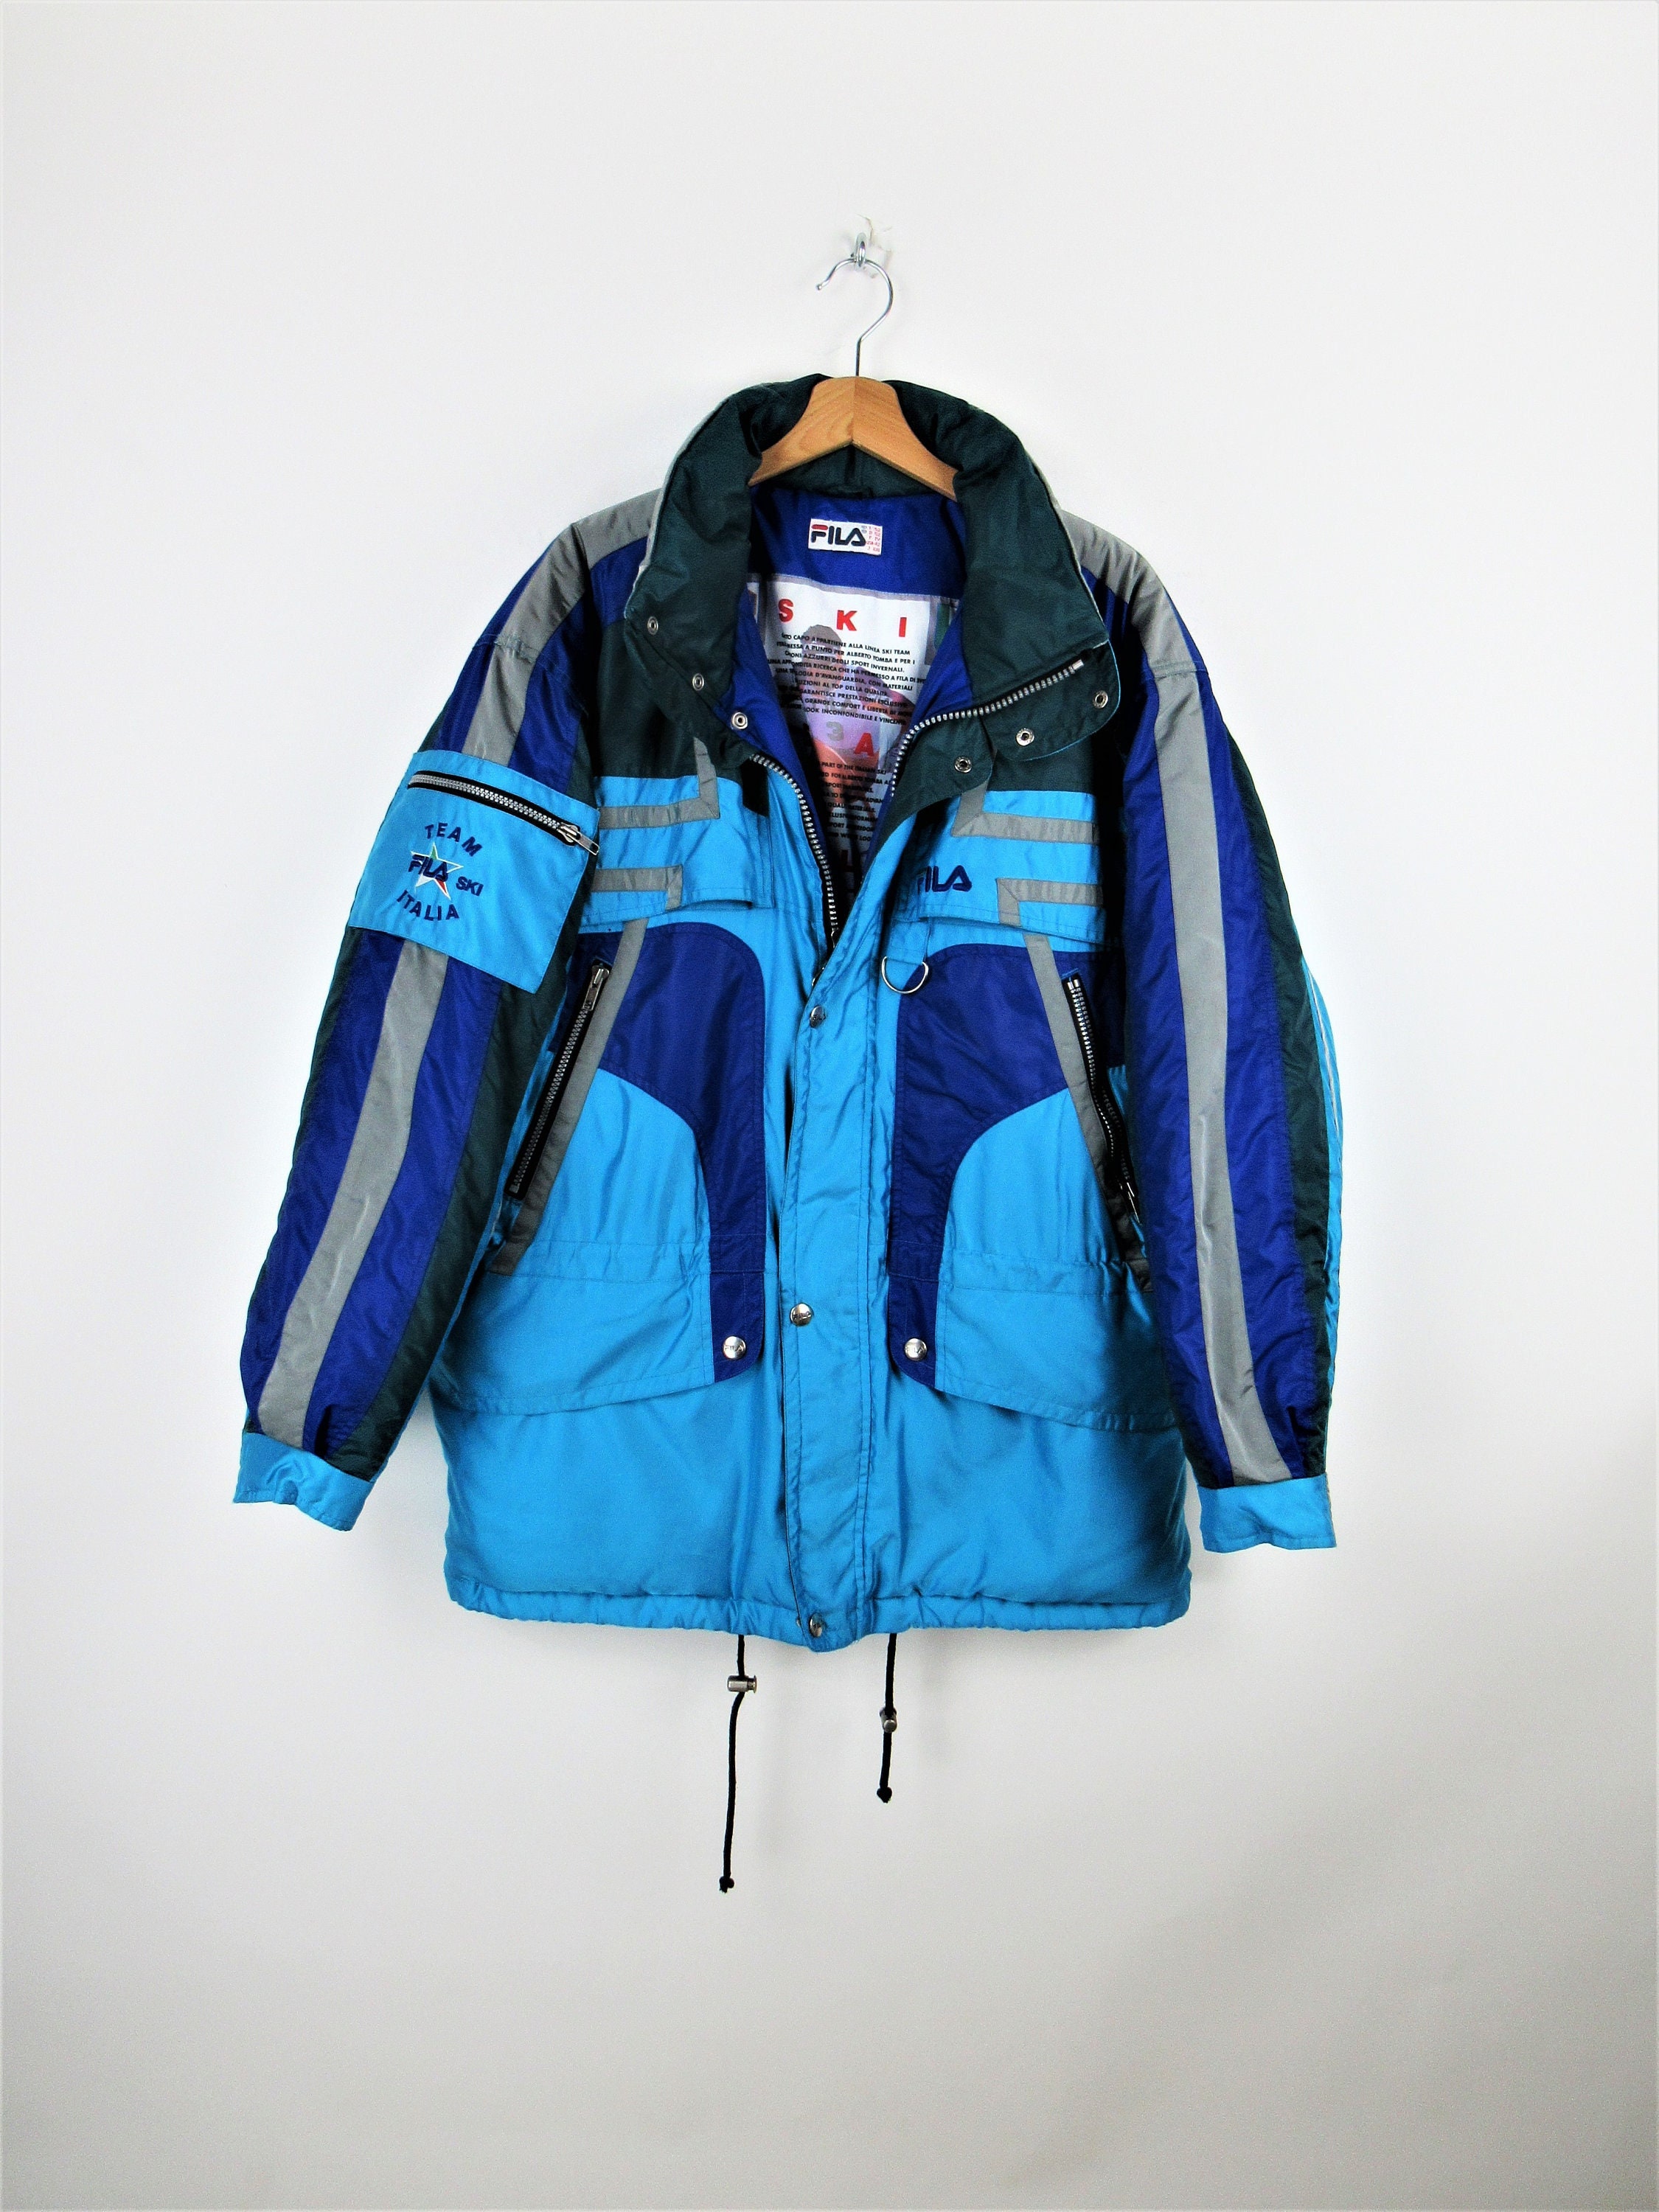 struik Twinkelen pistool Fila Ski Team Italia vintage jaren '90 ski jas Maat XL - Etsy Nederland